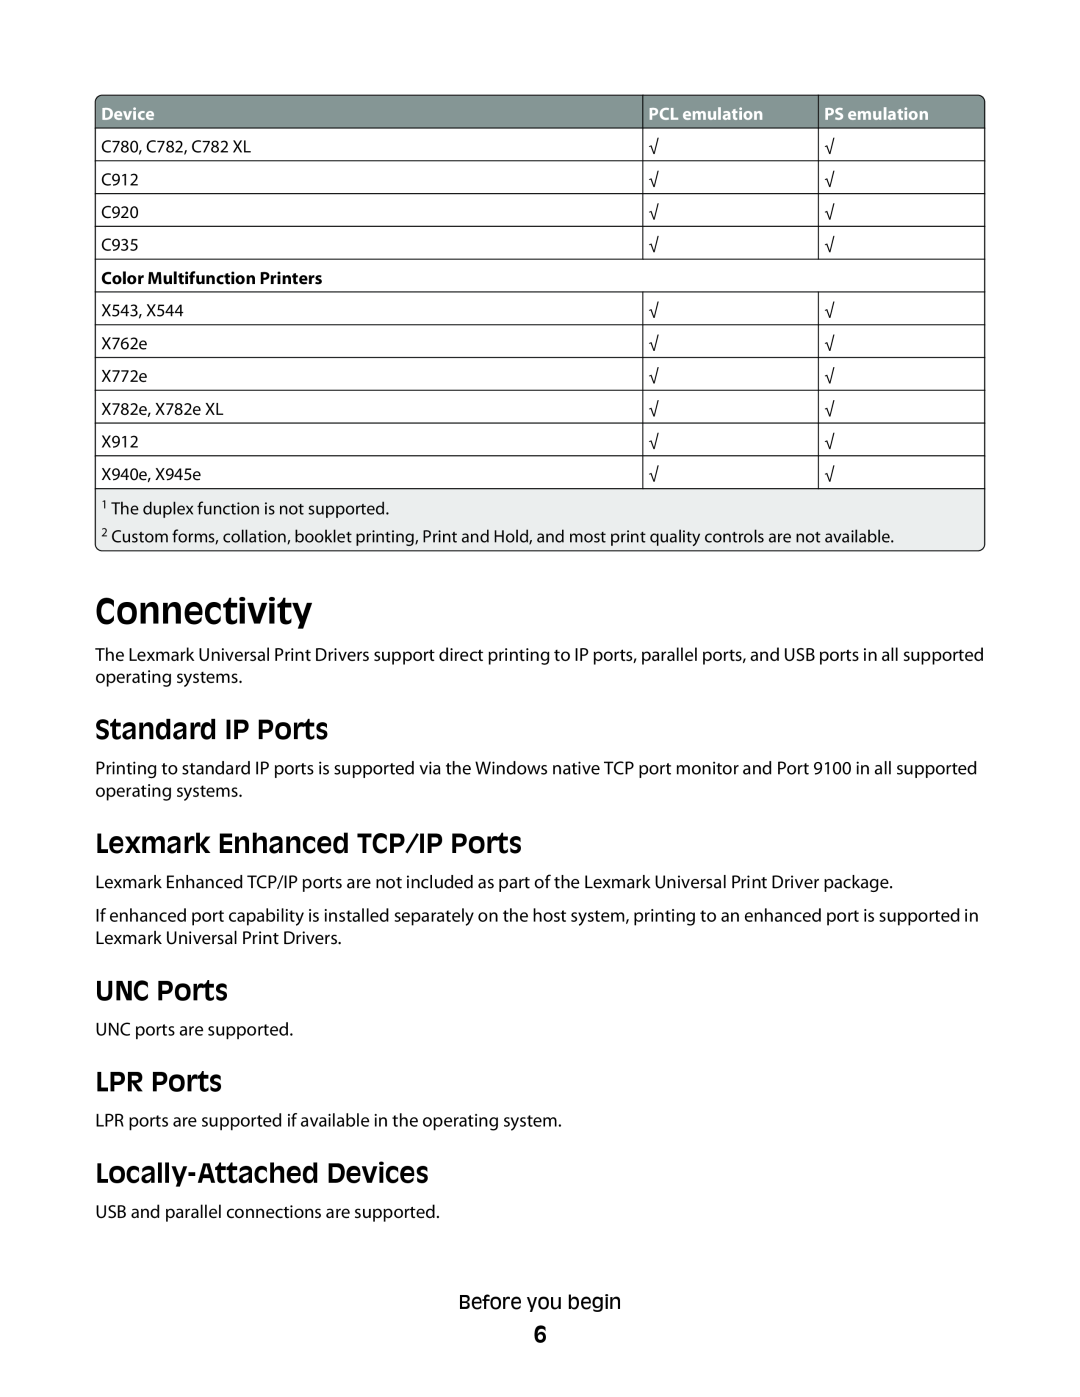 Lexmark Universal Driver manual Connectivity, Standard IP Ports, Lexmark Enhanced TCP/IP Ports, UNC Ports, LPR Ports 